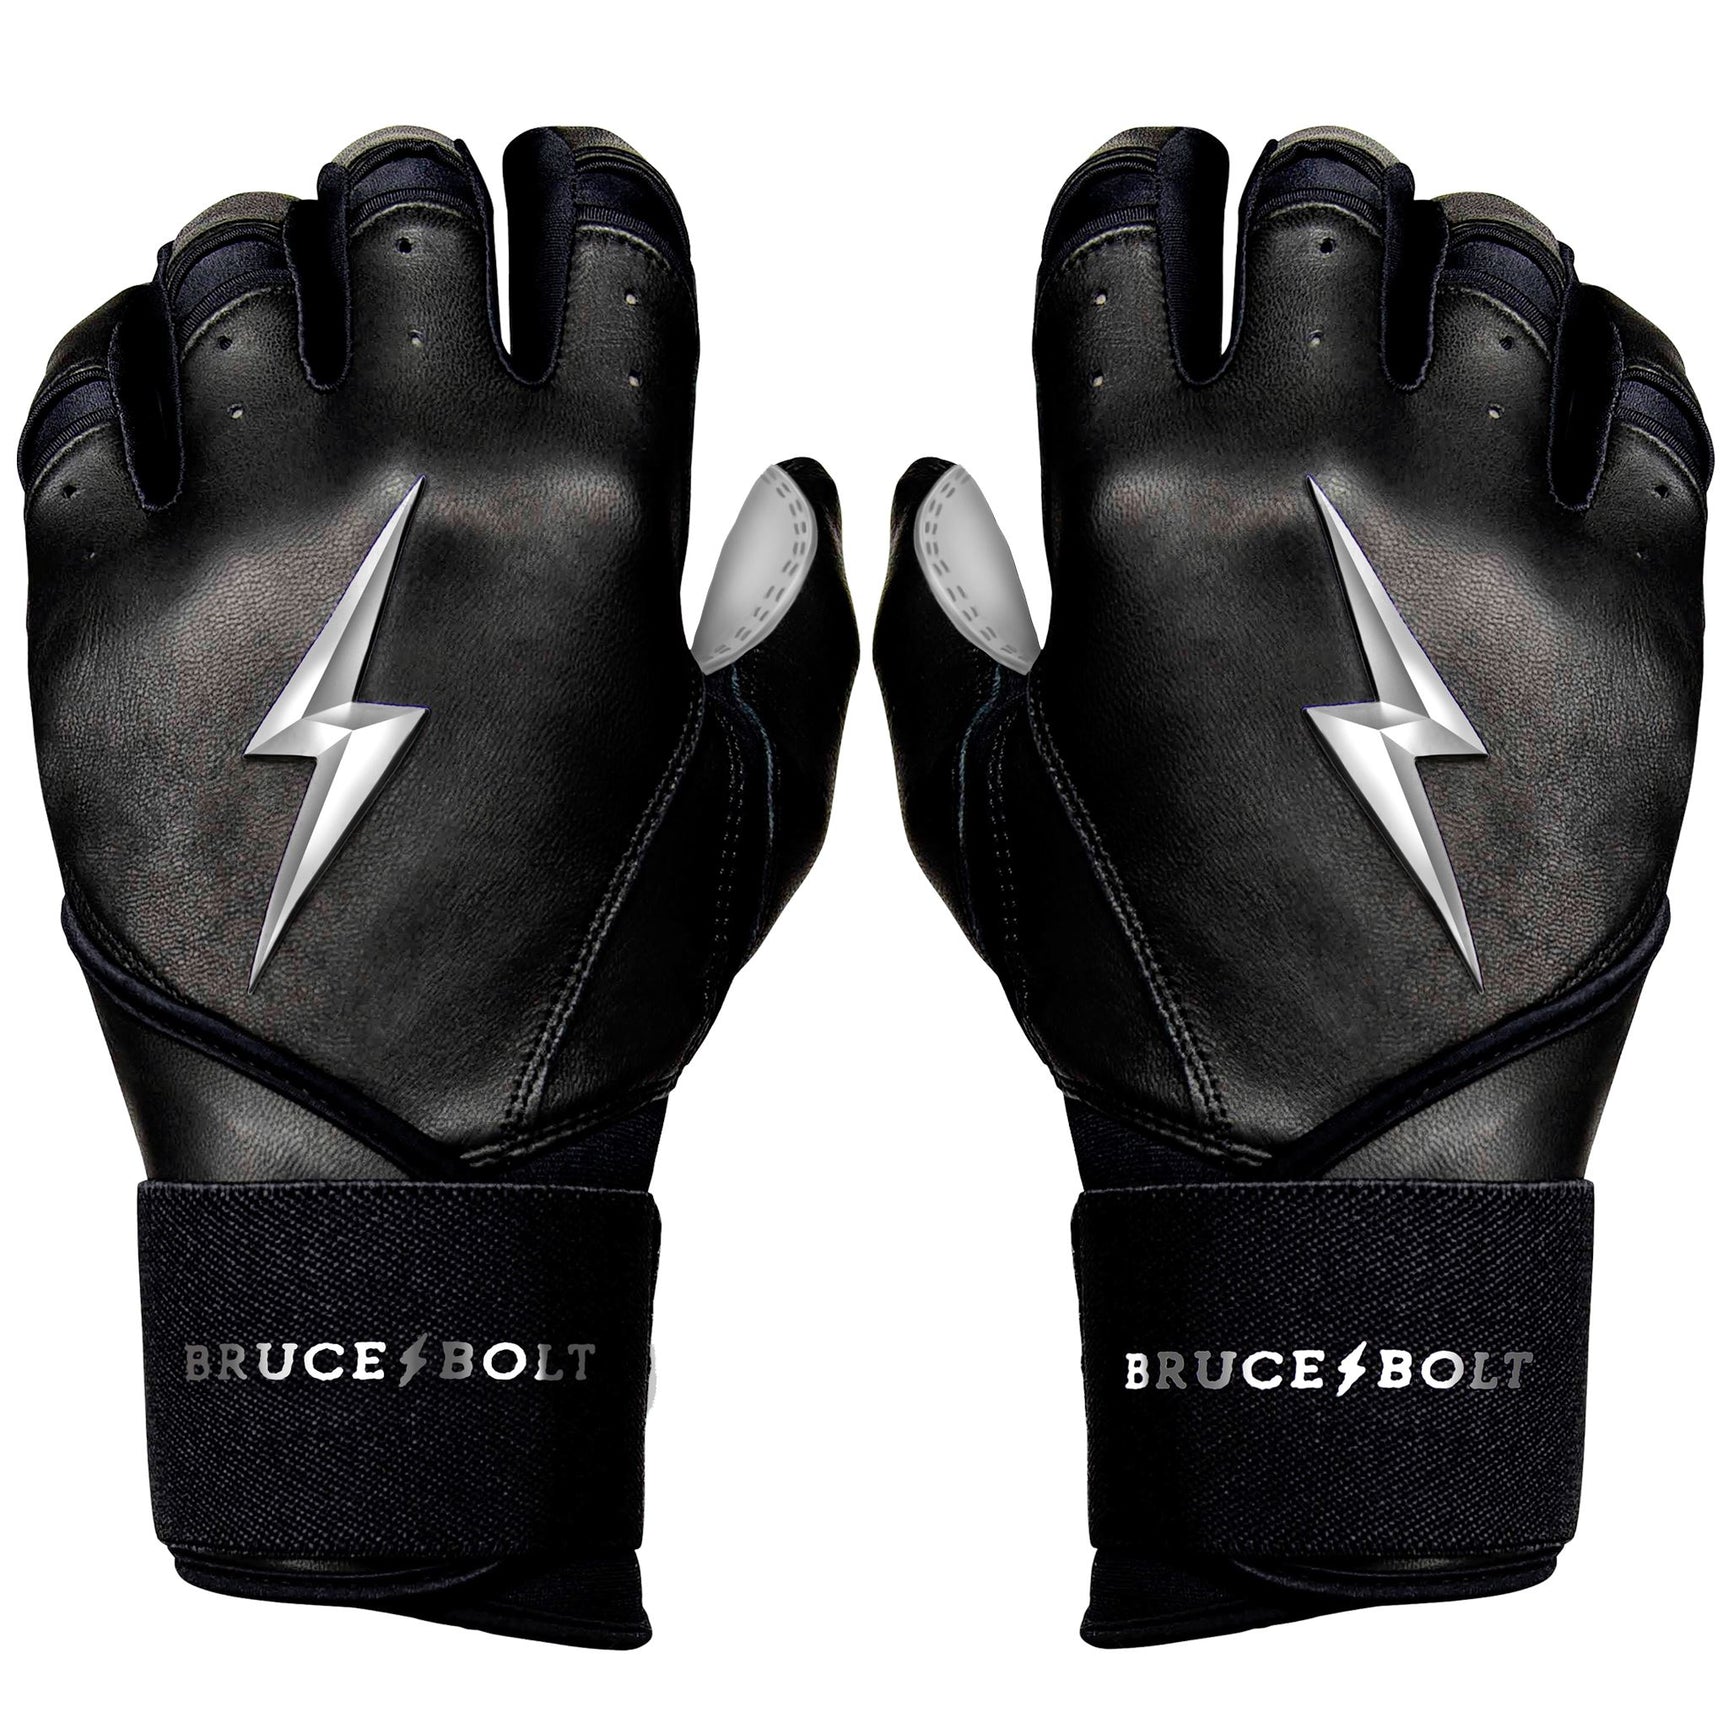 Bruce Bolt Premium Pro Chrome Long Cuff Batting Gloves Black